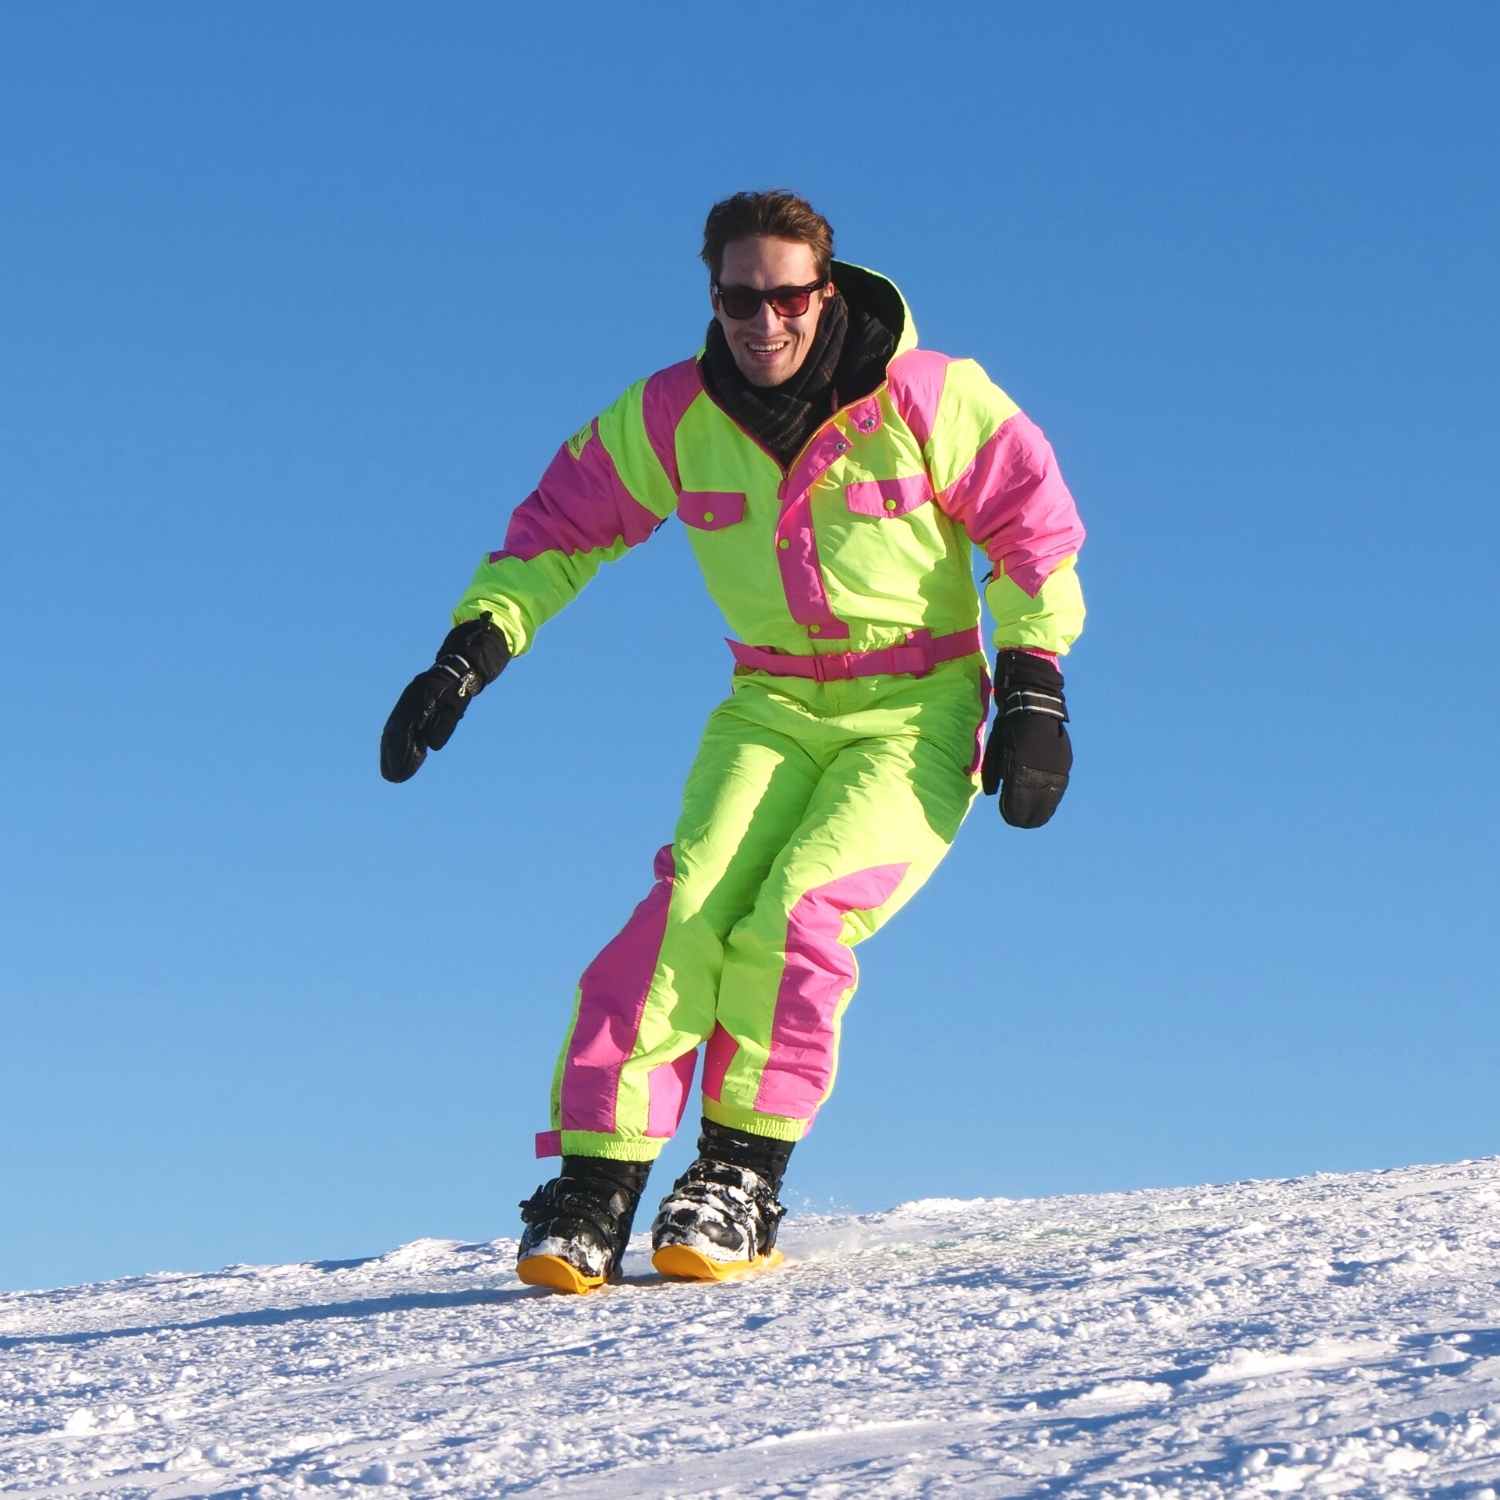 Tundra wolf mini skis for snow – Team Magnus